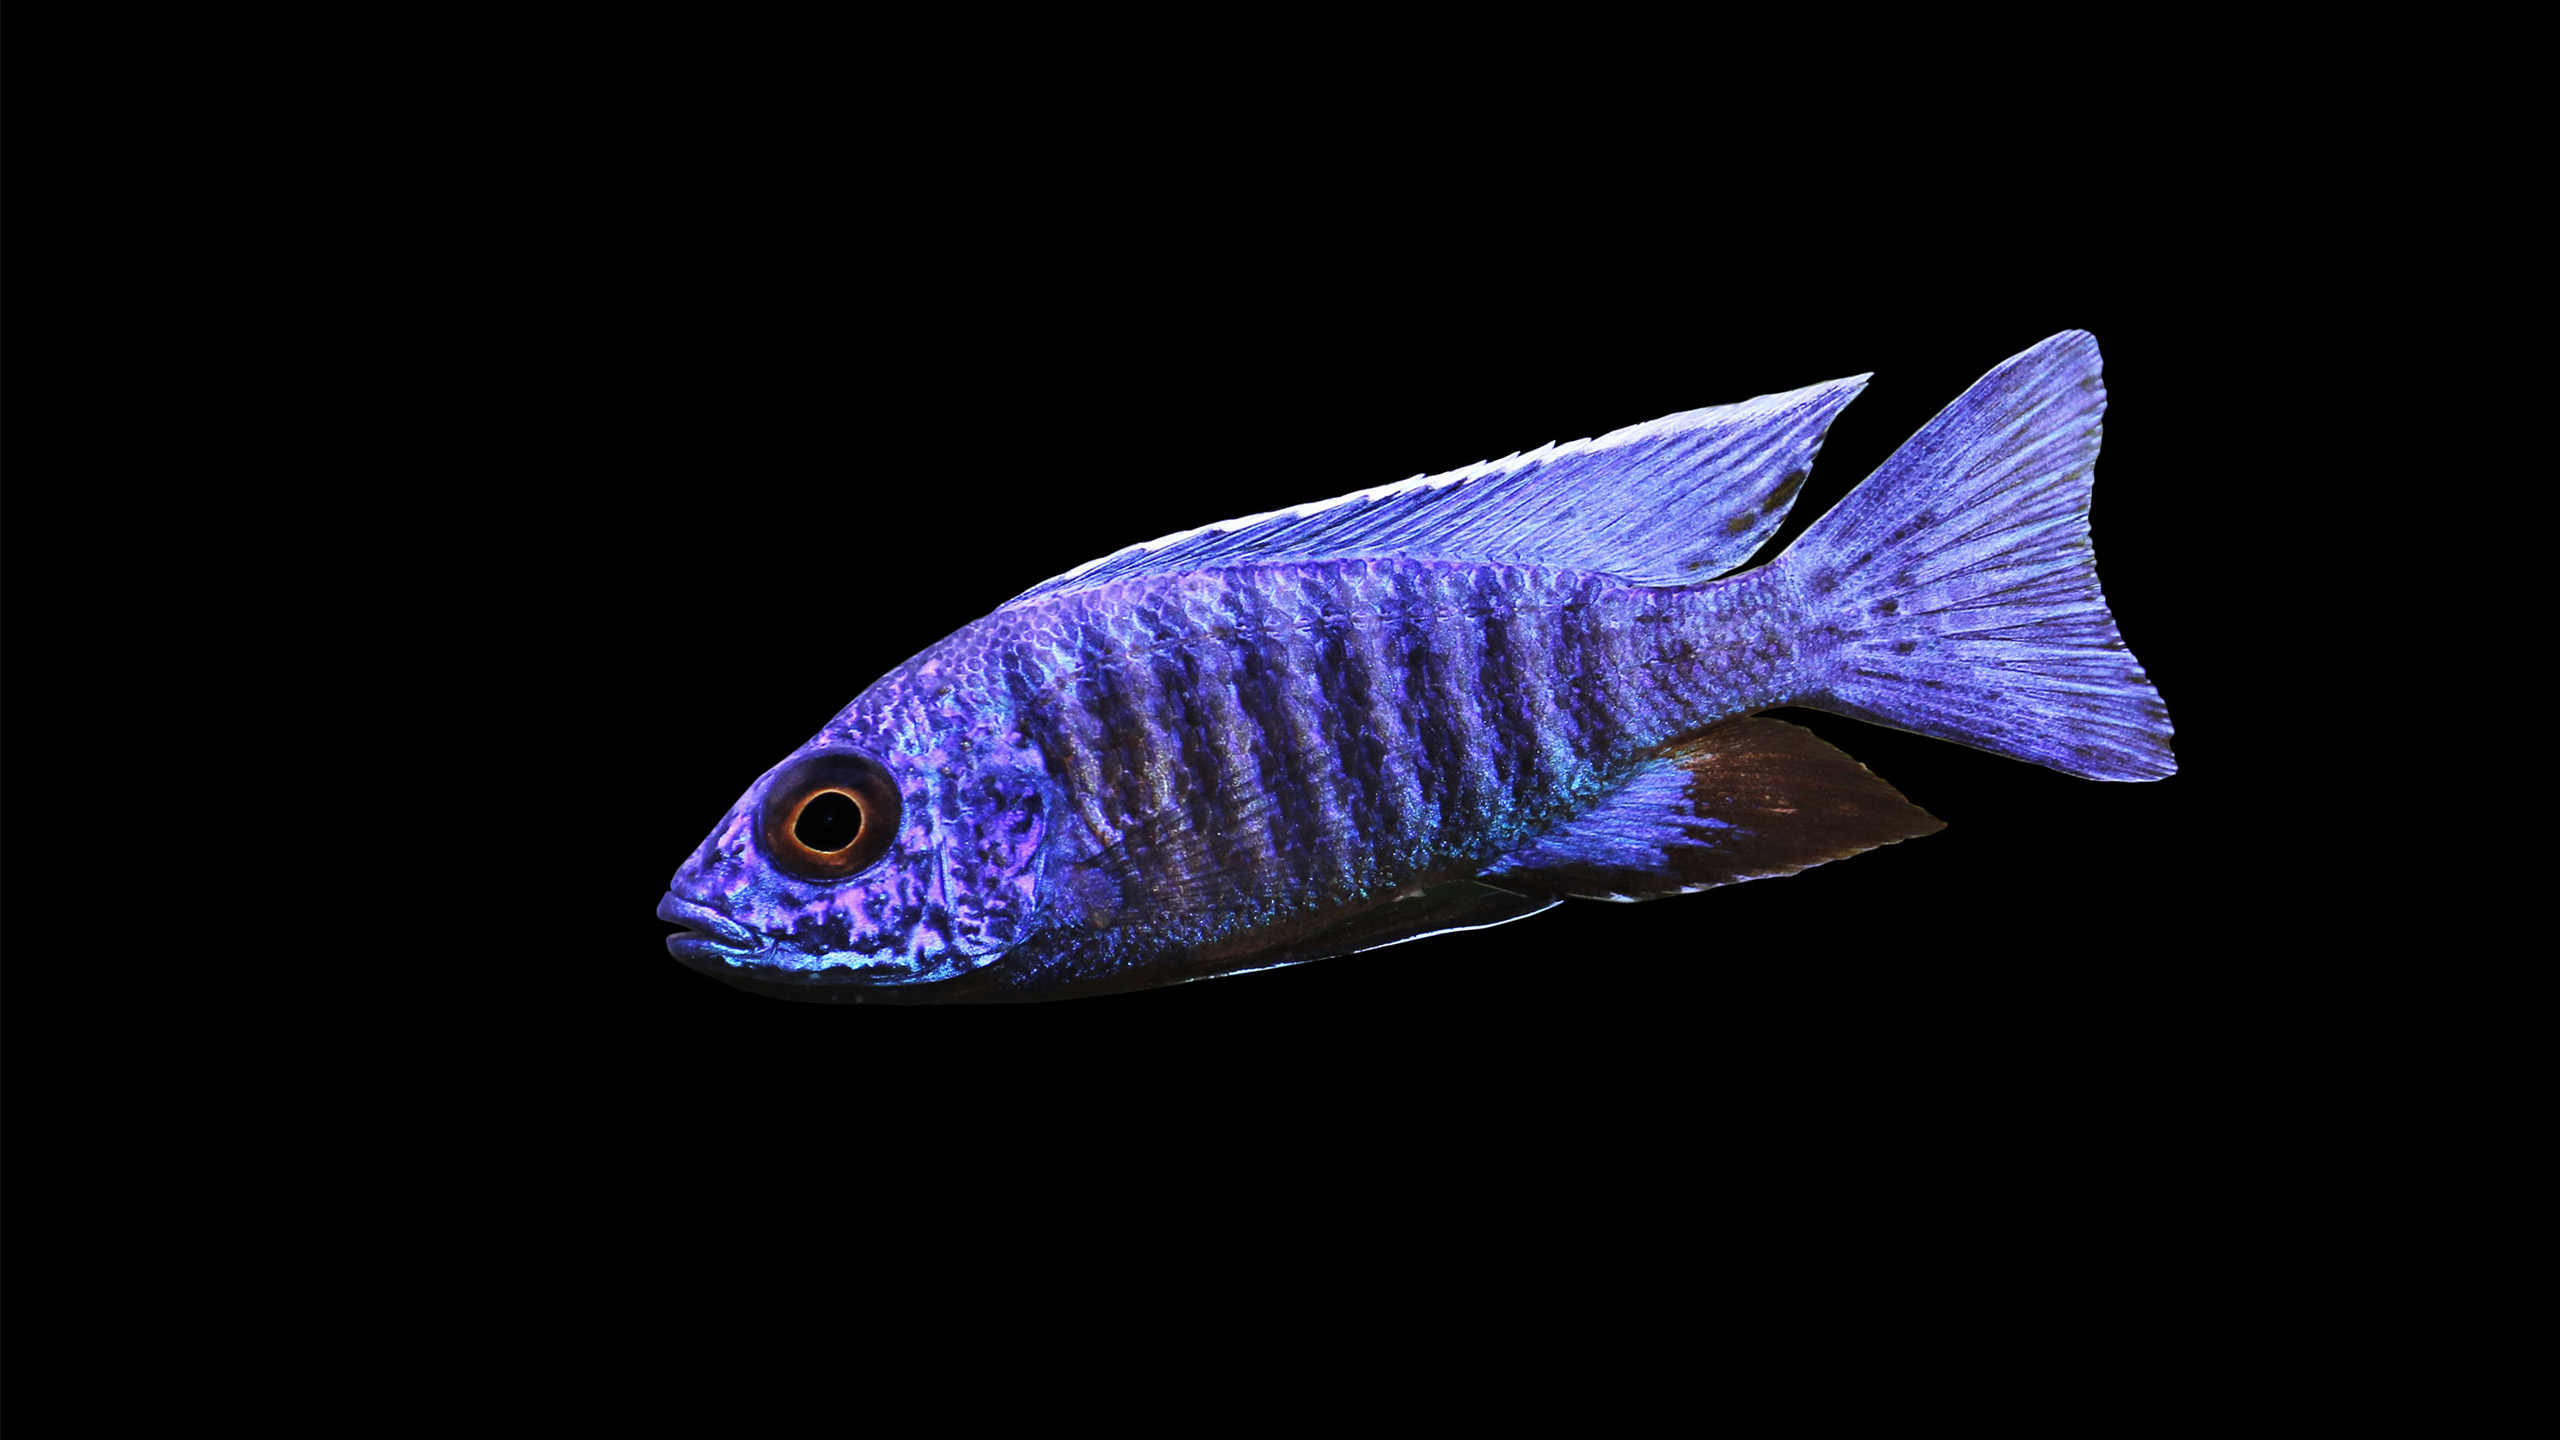 In English, Sciaenochromis fryeri from Lake Malawi is called "Electric Blue chichlid". | Arunee Rodloy, Shutterstock